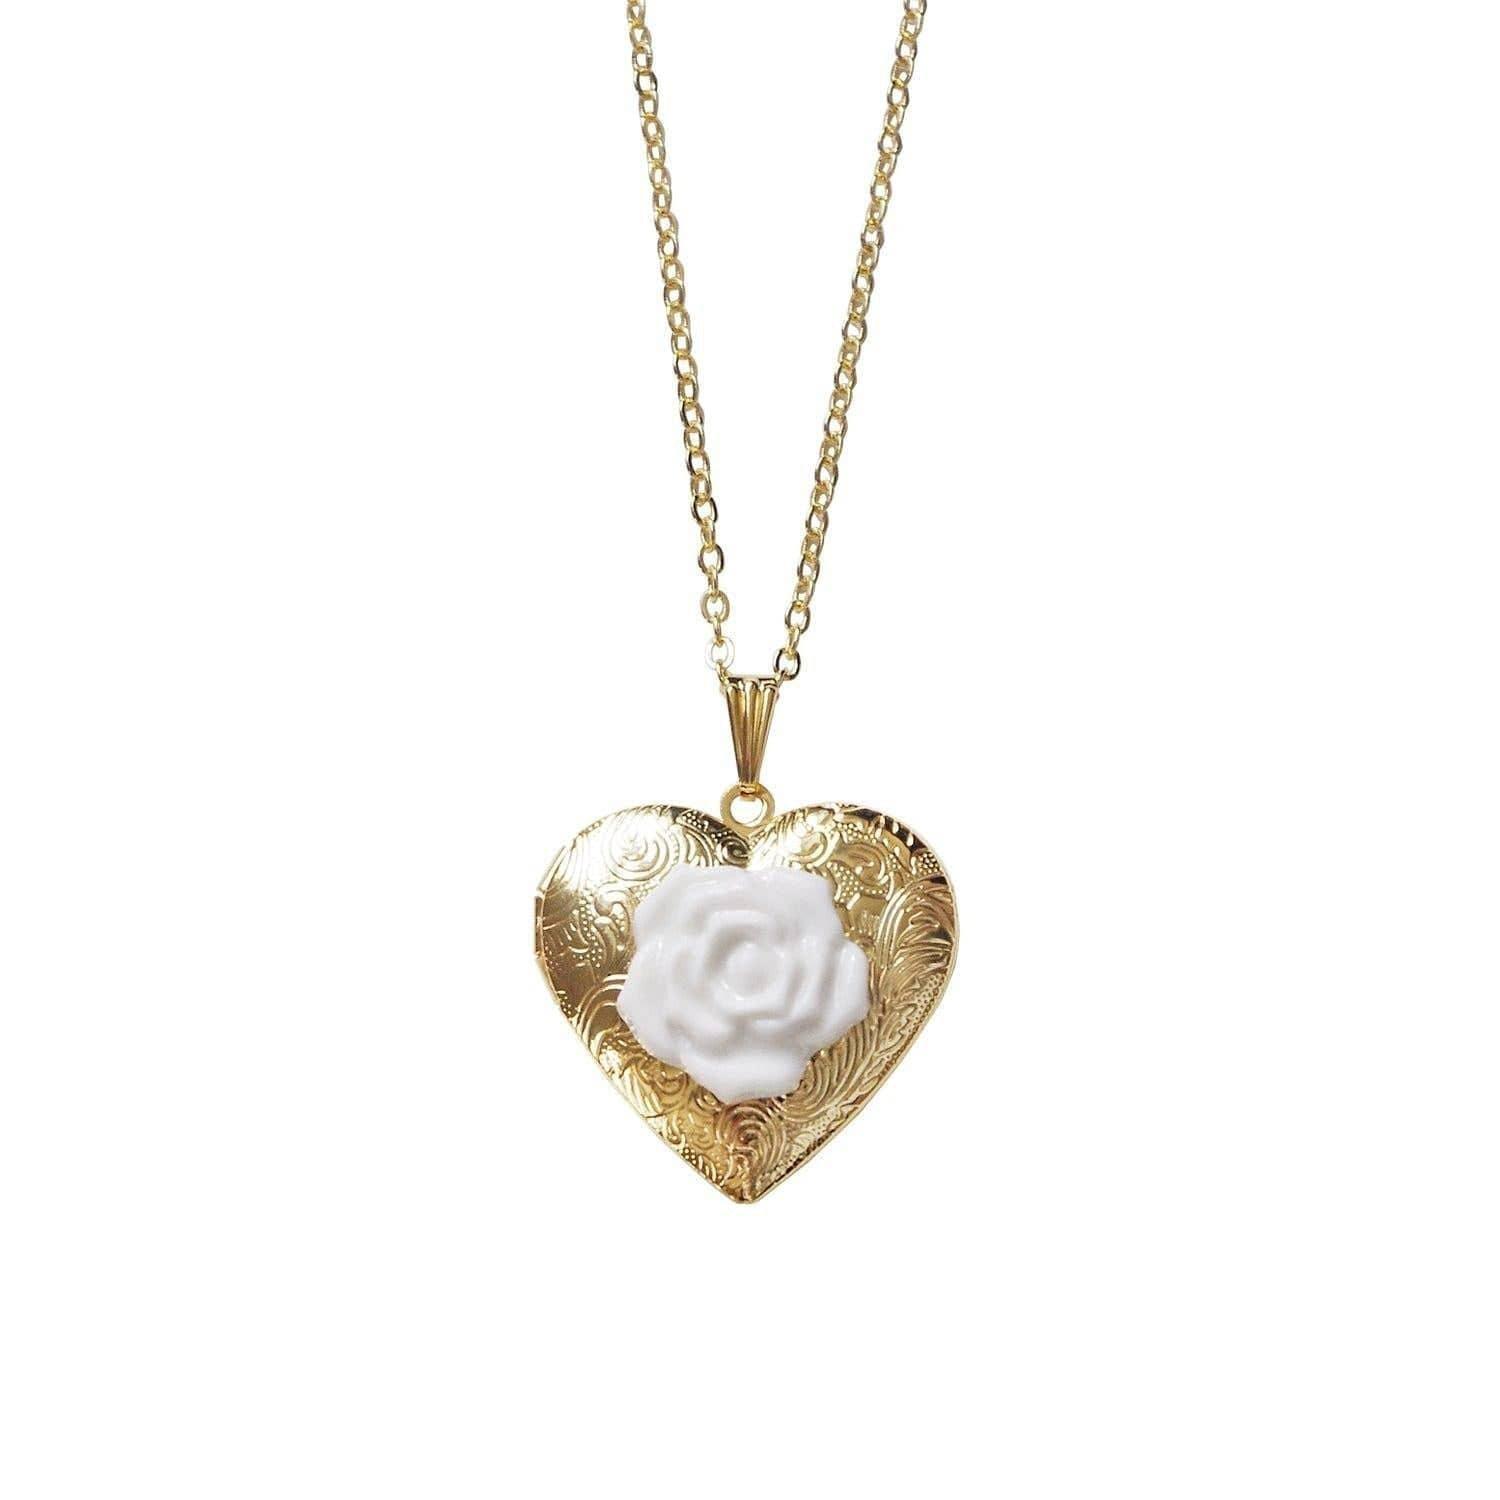 Classic Heart Locket With Porcelain Rose Pendant Necklace | POPORCELAIN Based in Denmark